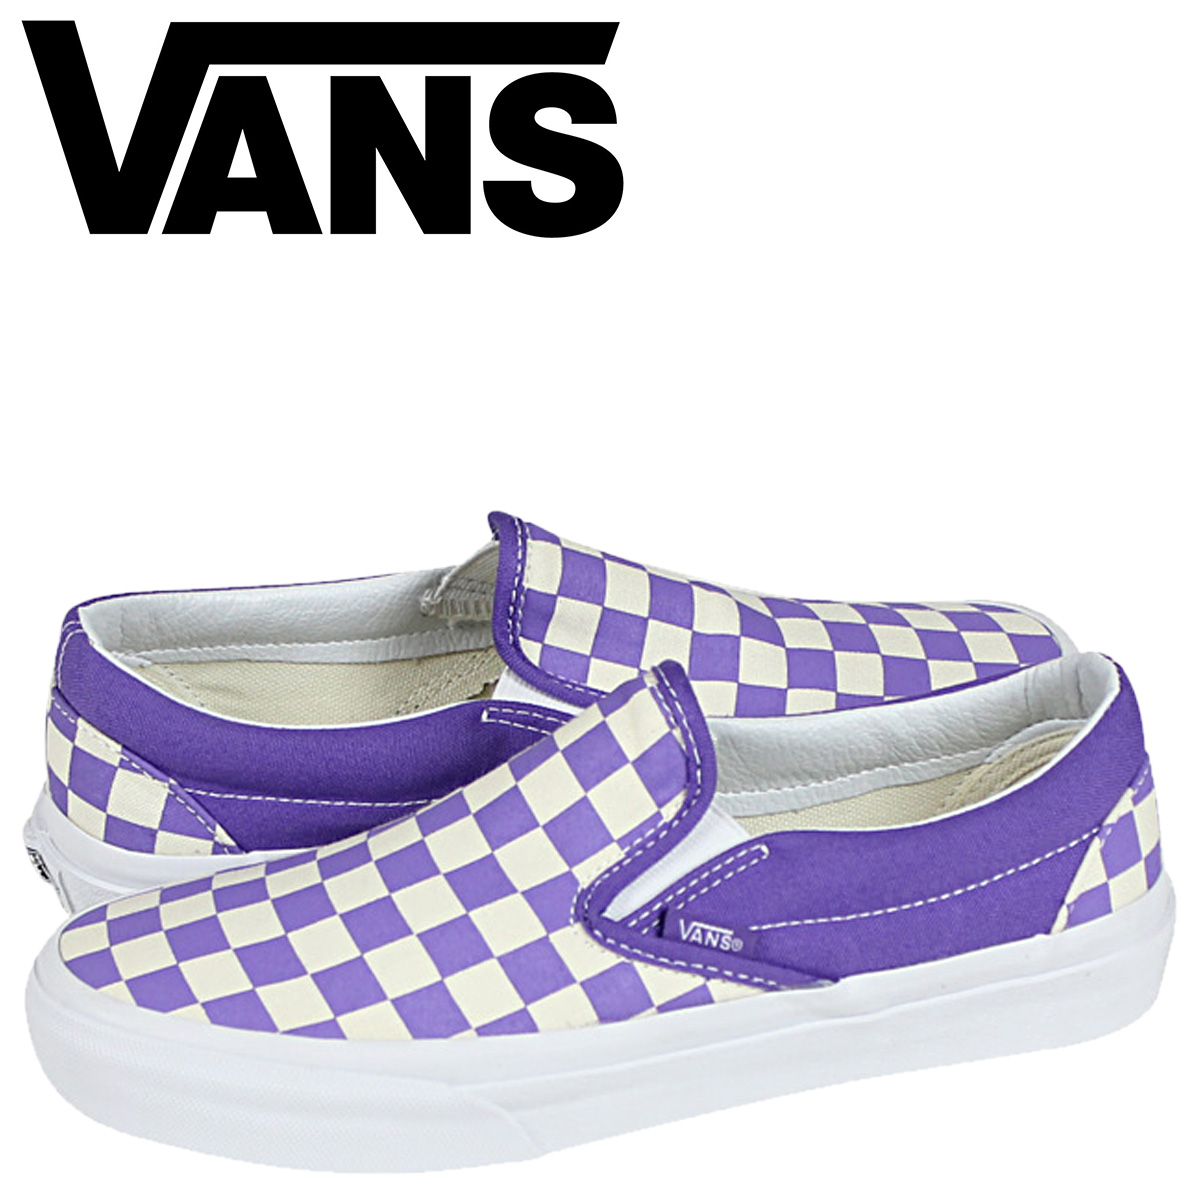 vans purple checkered shoes